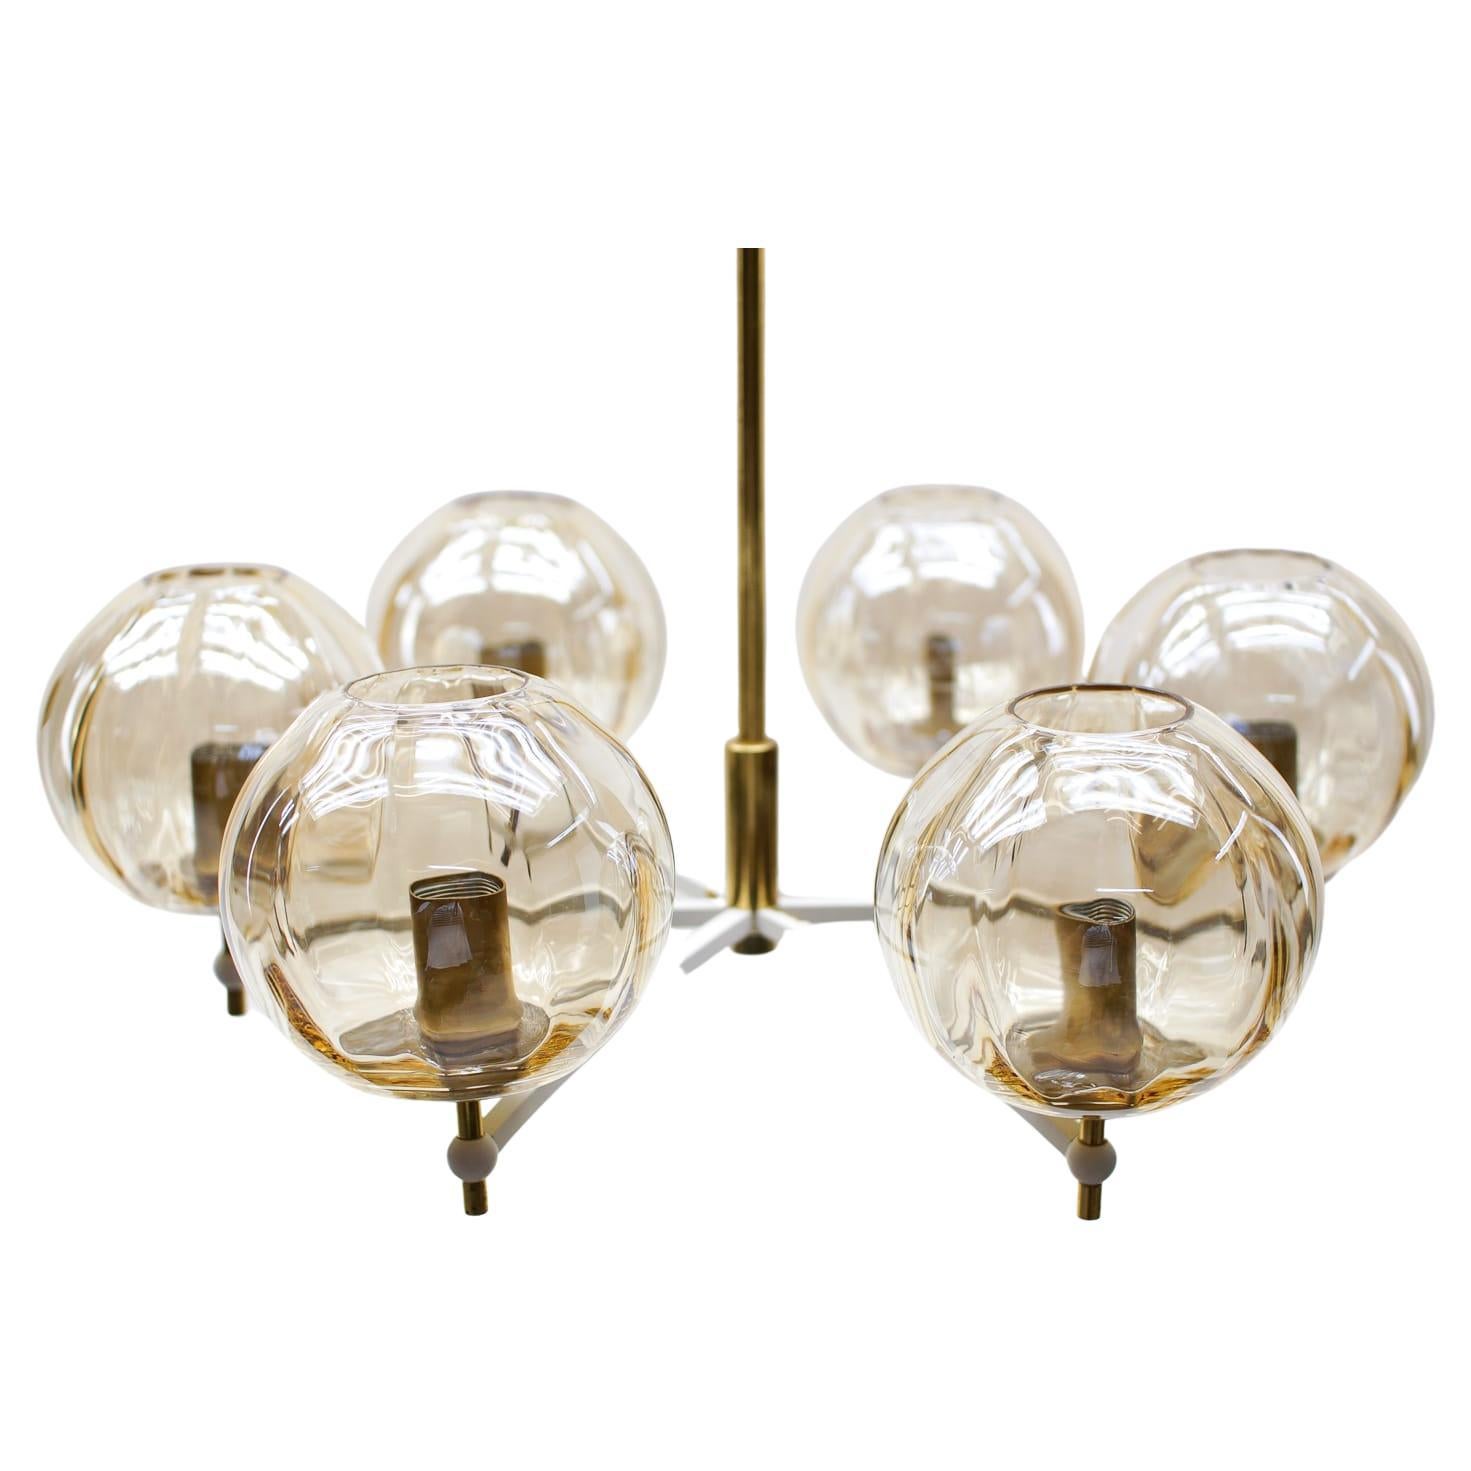 Elegant Mid-Century Modern Orbit Ceiling Lamp in Amber Glass and Brass, 1960s